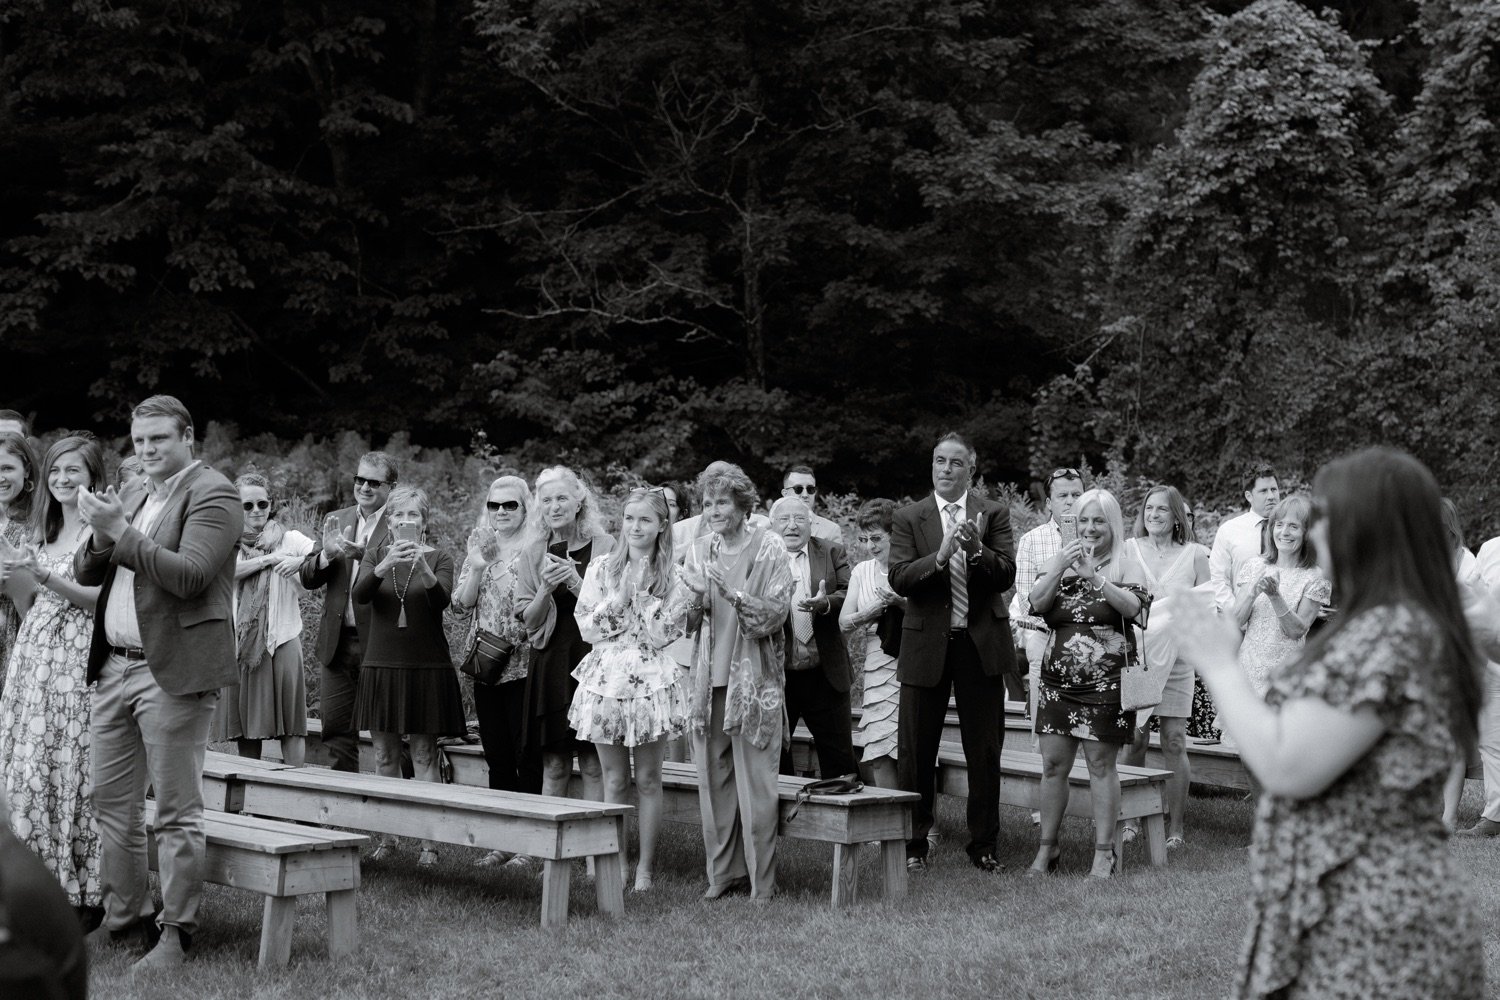 039_cameron-alexa-wedding-216_guests clapping wedding ceremony.jpg